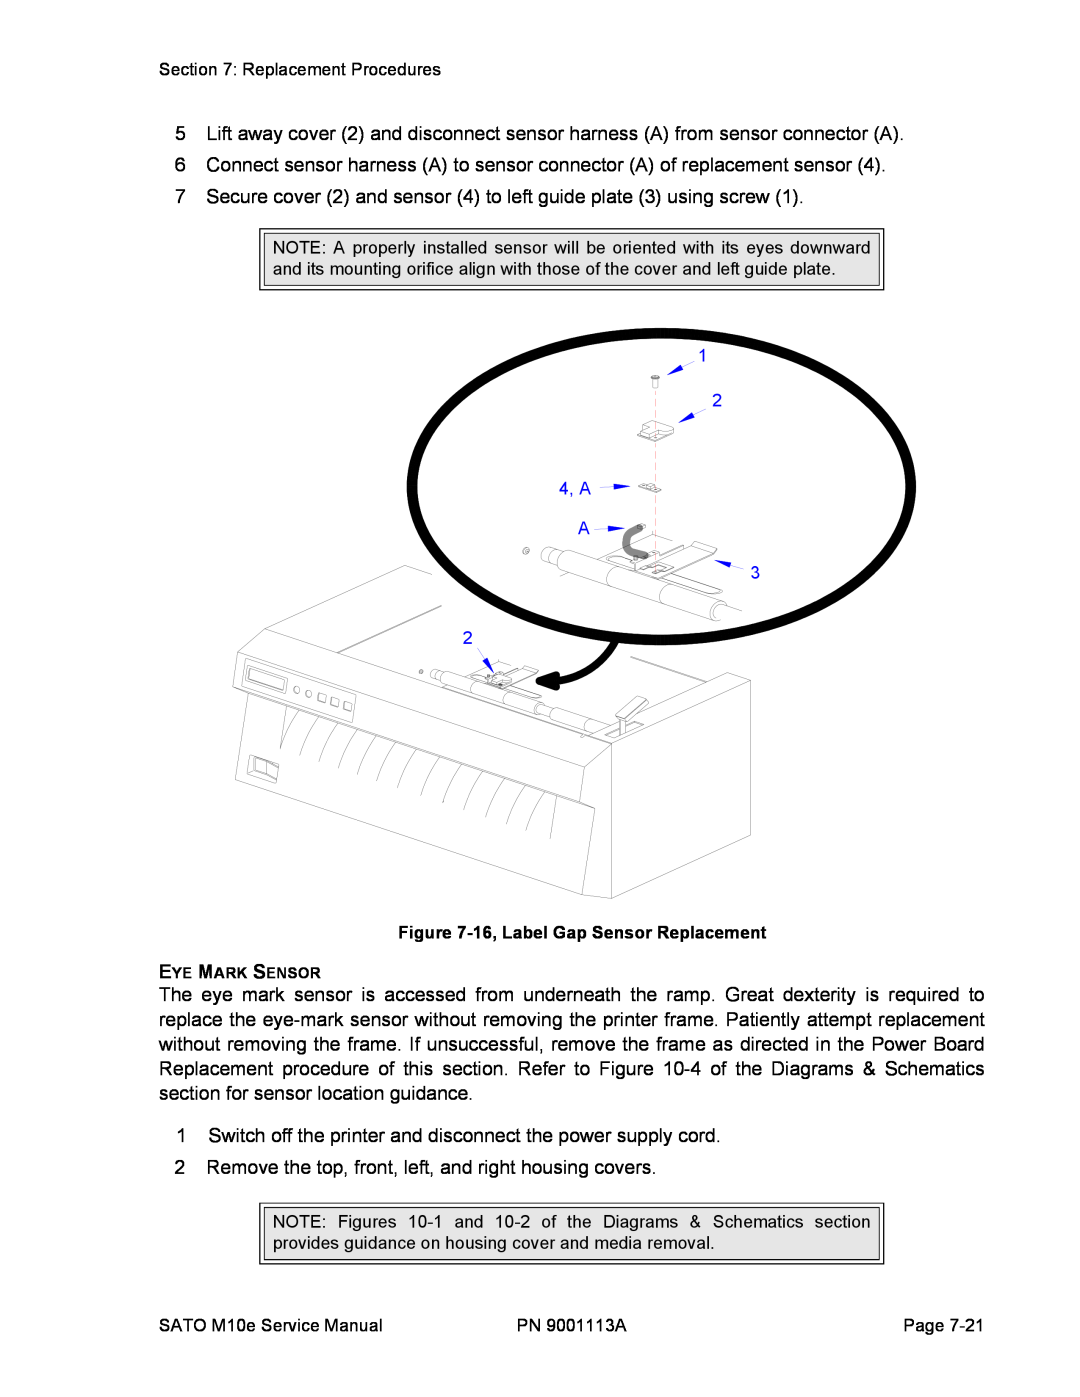 SATO 10e service manual 4, A A, 16, Label Gap Sensor Replacement 